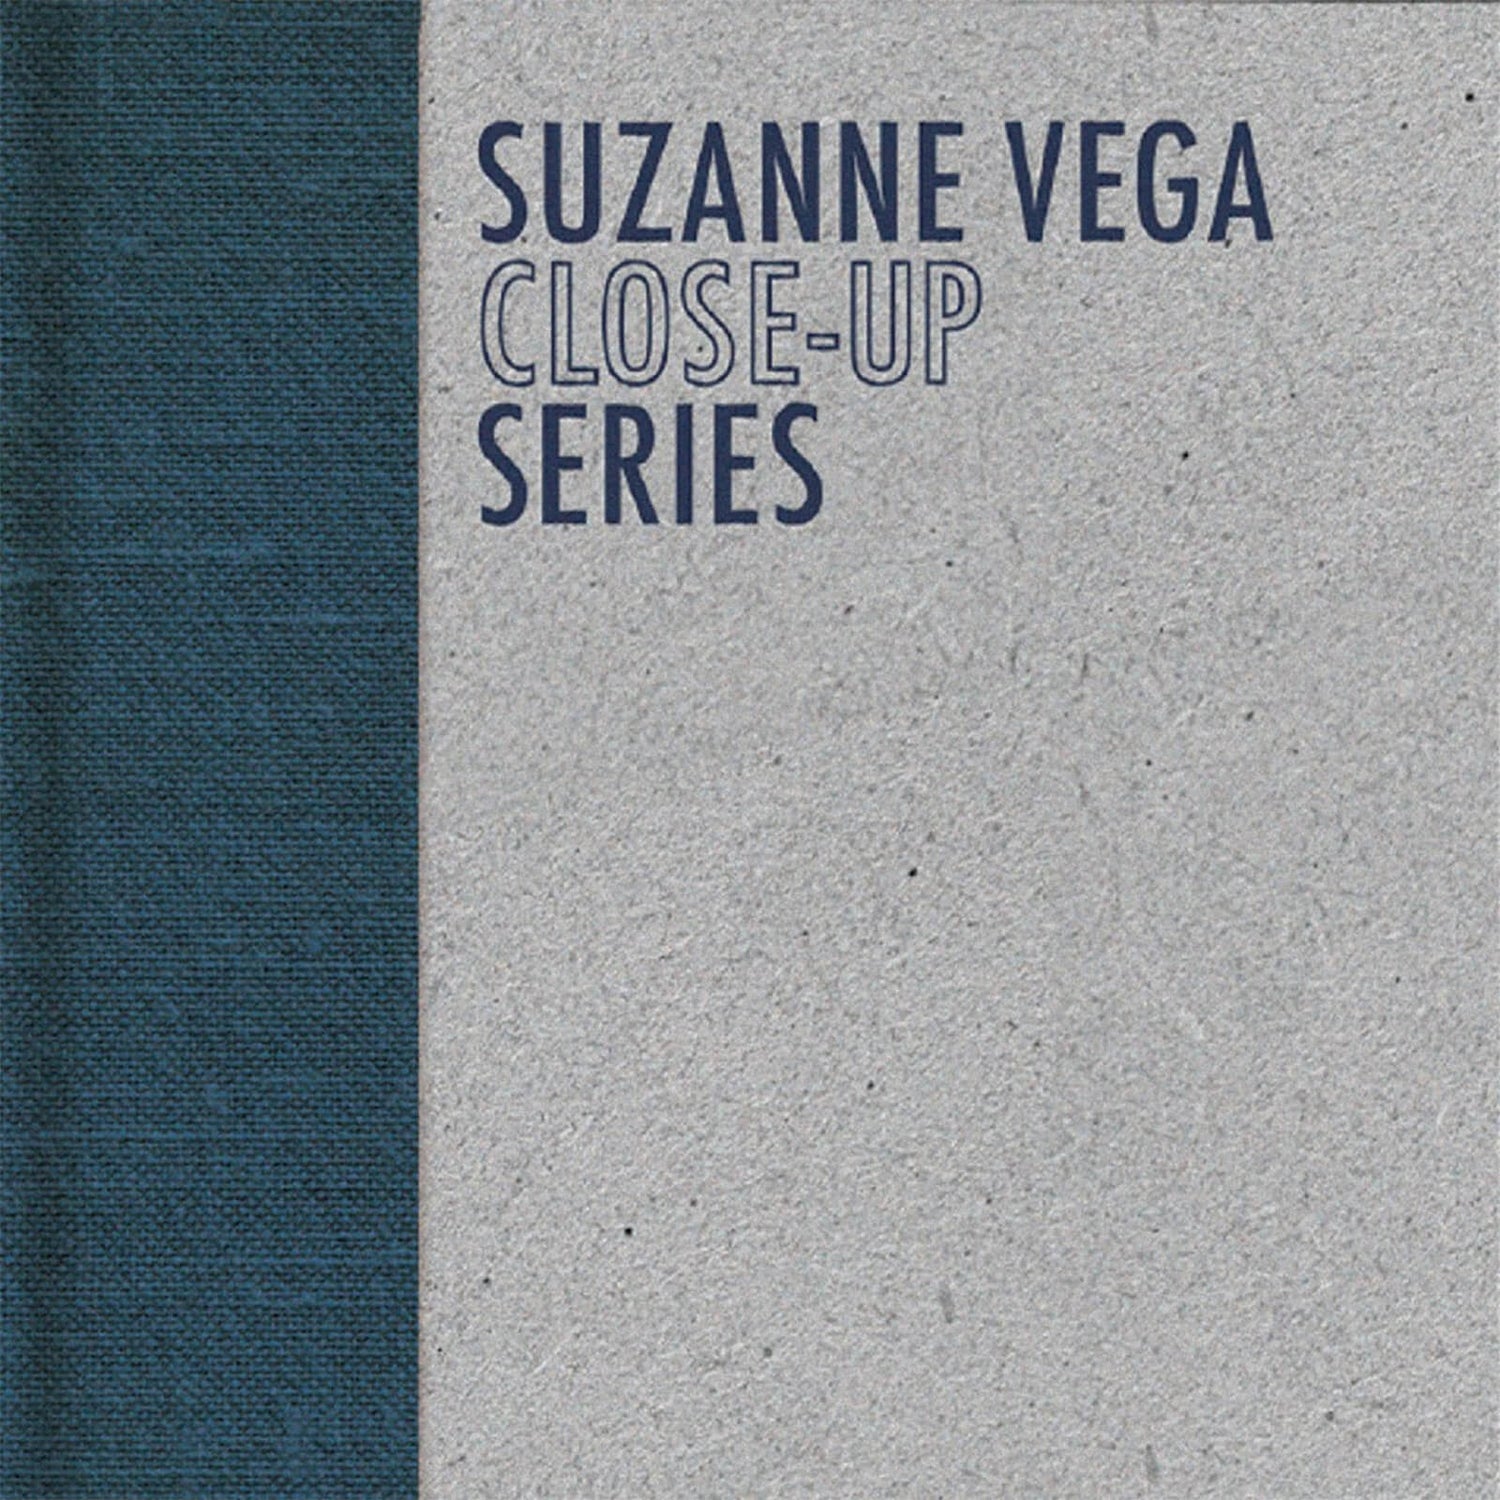 Suzanne Vega - Close-up Series Volumes 1-4 Vinyl Box Set Box Set